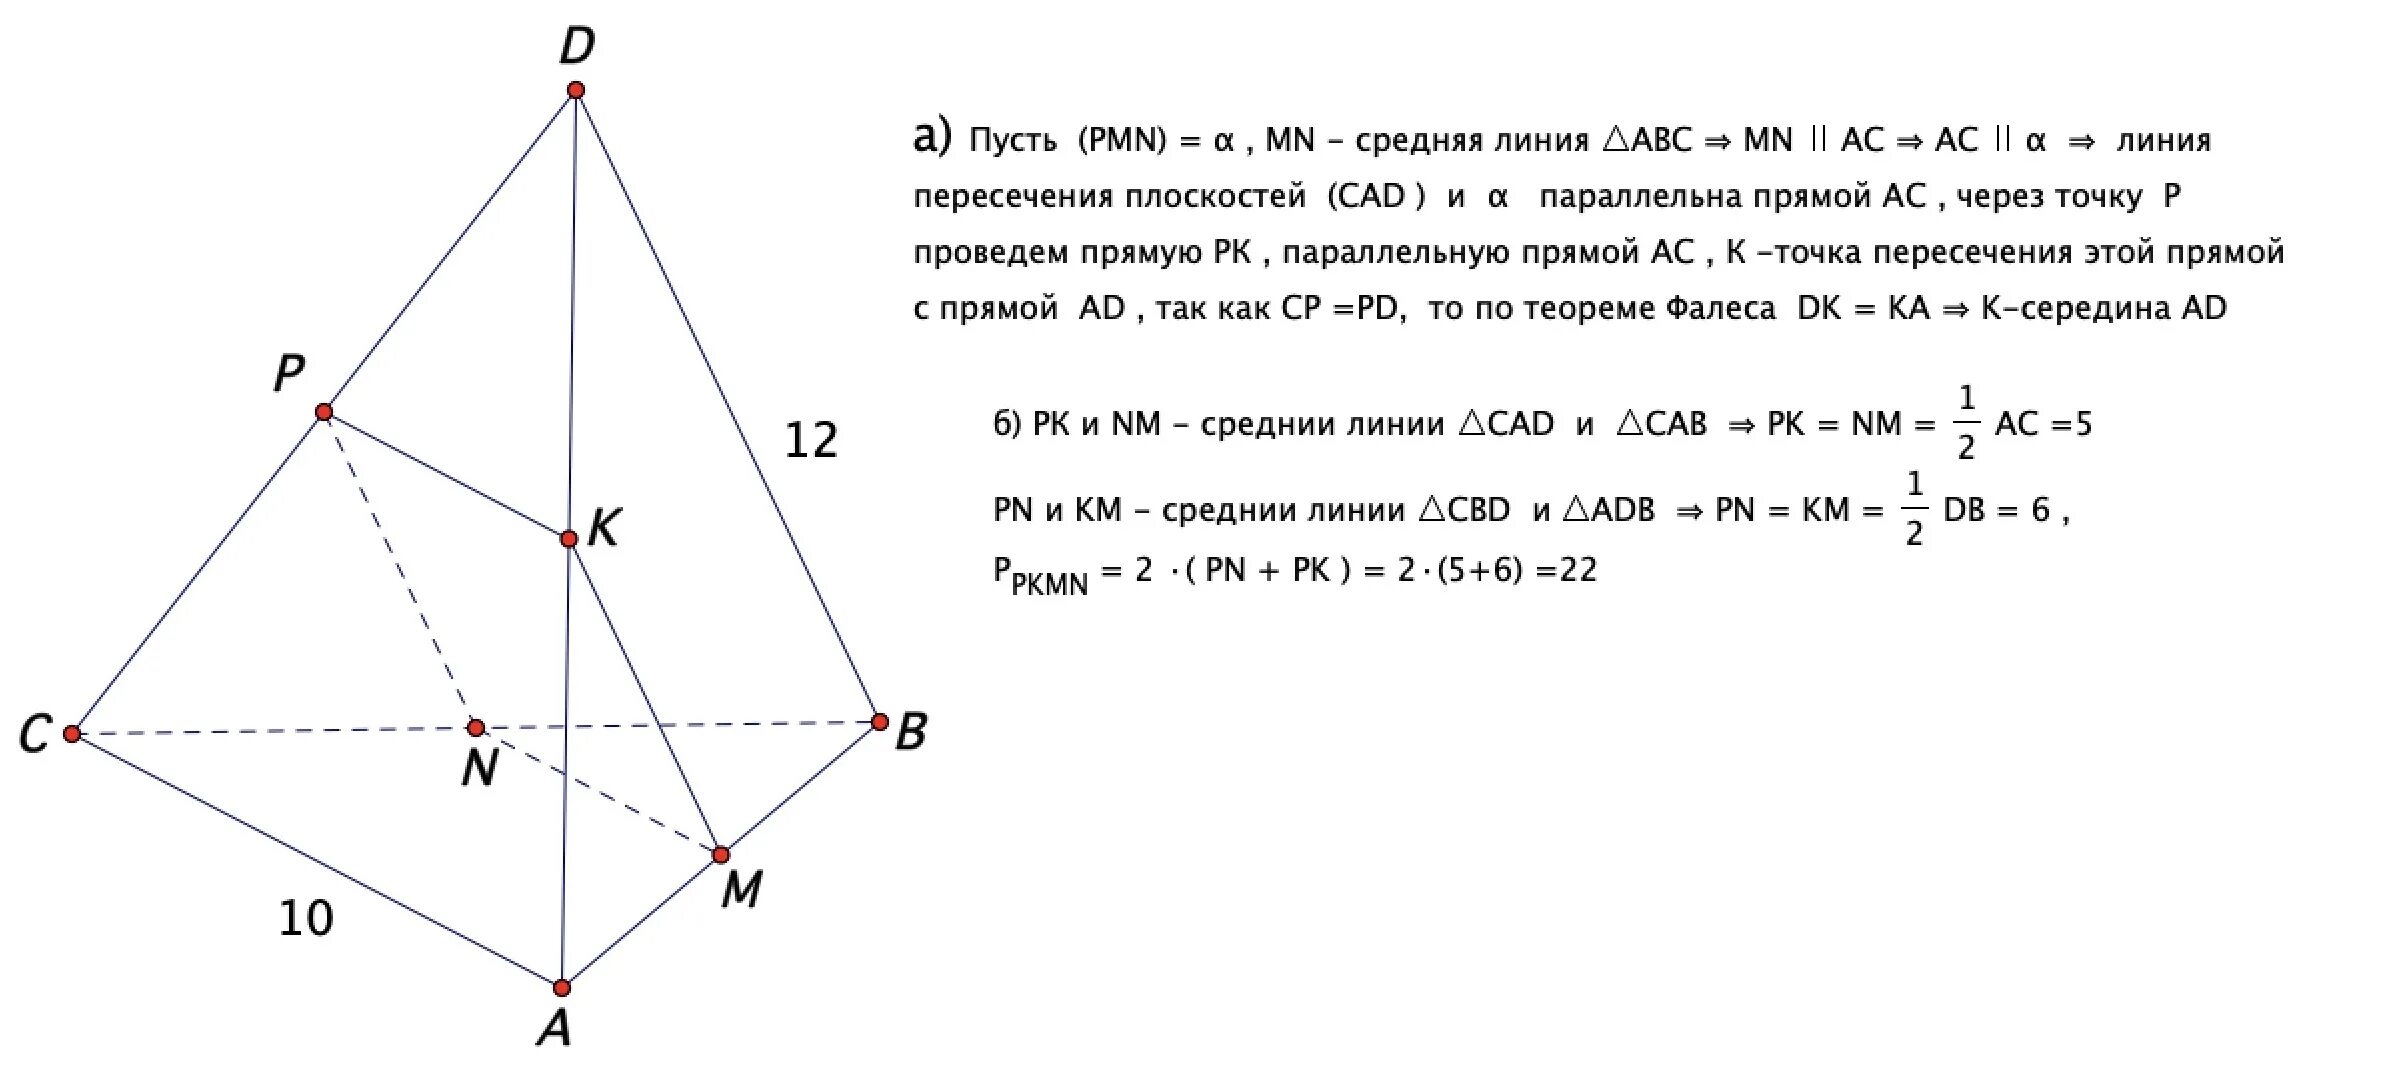 Ab c de f. Тетраэдр ABCD точка m середина ребра ab. Середины ребер тетраэдра ABCD. В тетраэдре ABCD точка m - середина ребра BC, ab=AC. В тетраэдре ABCD точки m n и k середины.